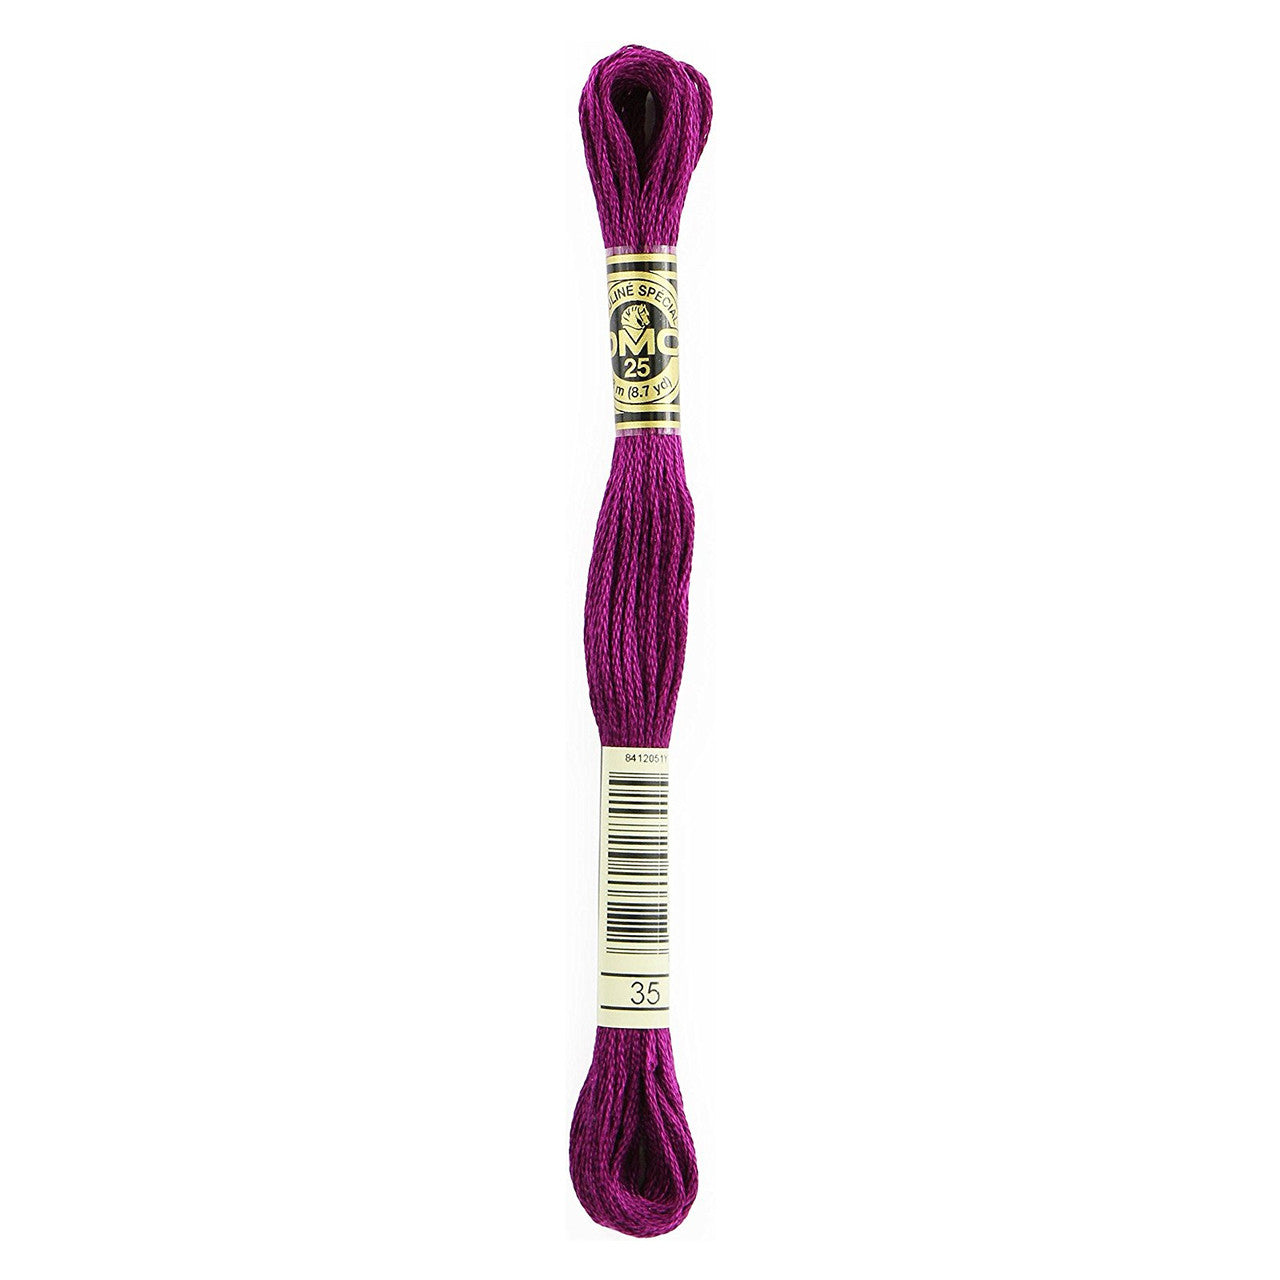 DMC 35 - Fuchsia - Very Dark - DMC 6 Strand Embroidery Thread, Thread & Floss, Thread & Floss, The Crafty Grimalkin - A Cross Stitch Store